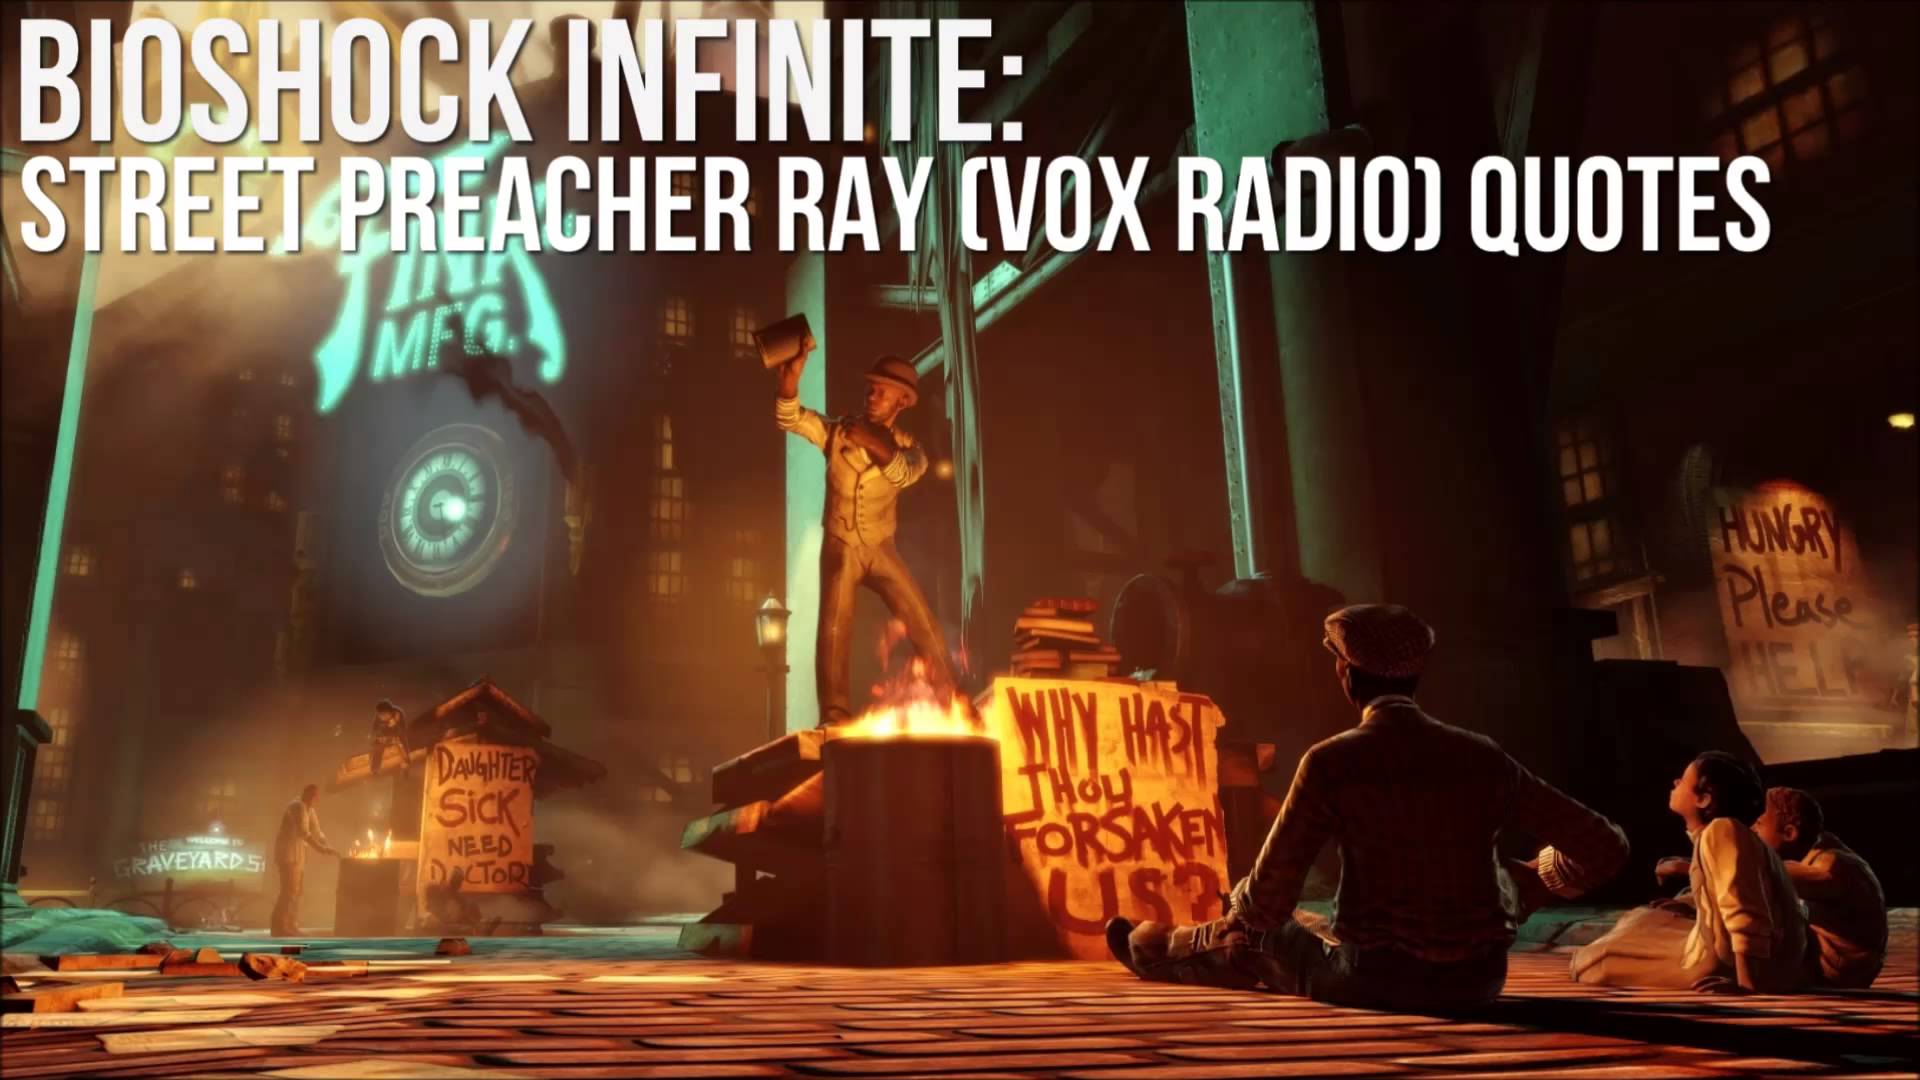 Bioshock Infinite: Street Preacher Ray (Vox Radio) Quotes - YouTube